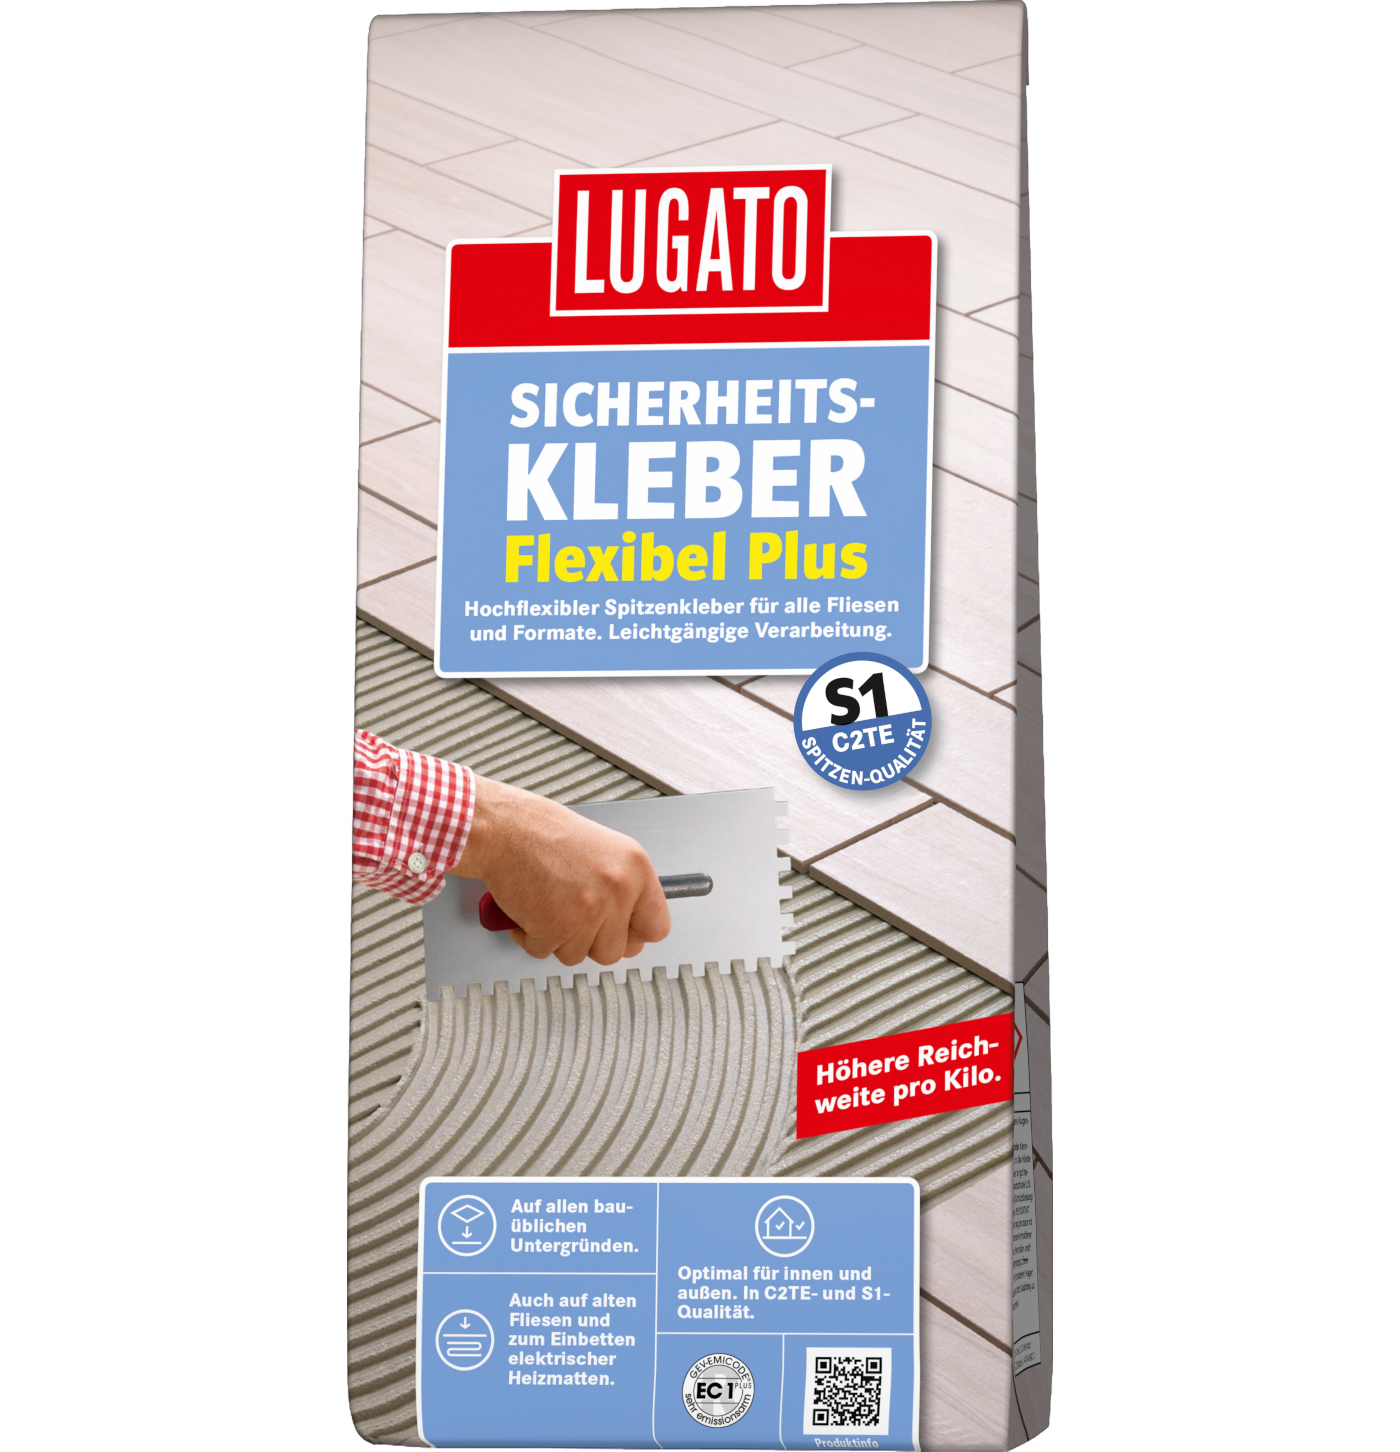 Lugato Sicherheitskleber Flexibel Plus 3,5 kg von LUGATO